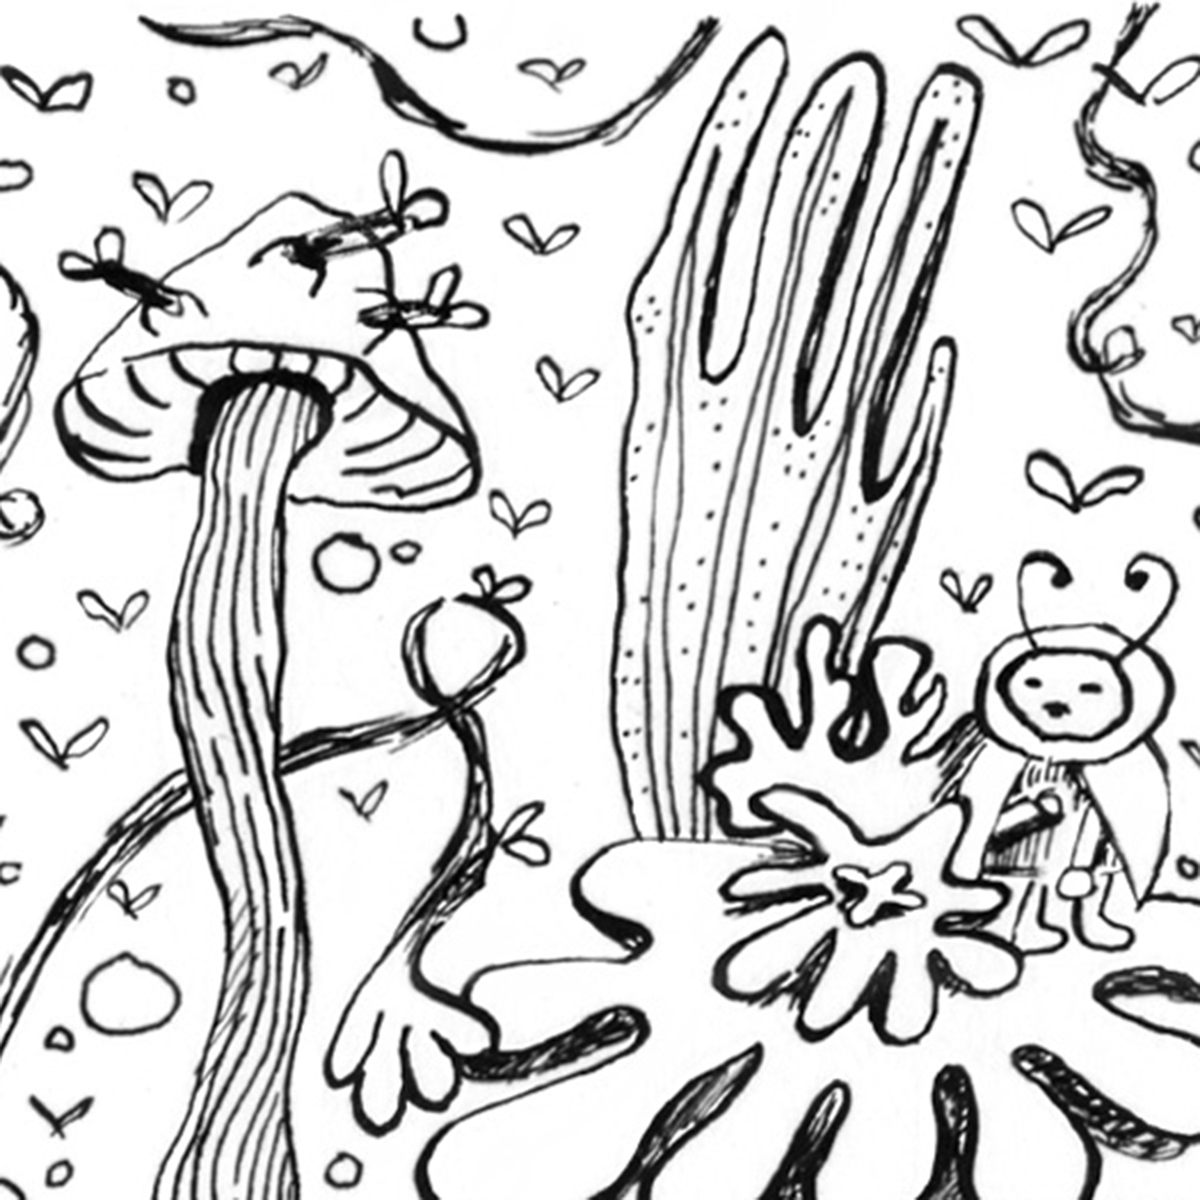 Comic sketch of ladybugs and mushrooms